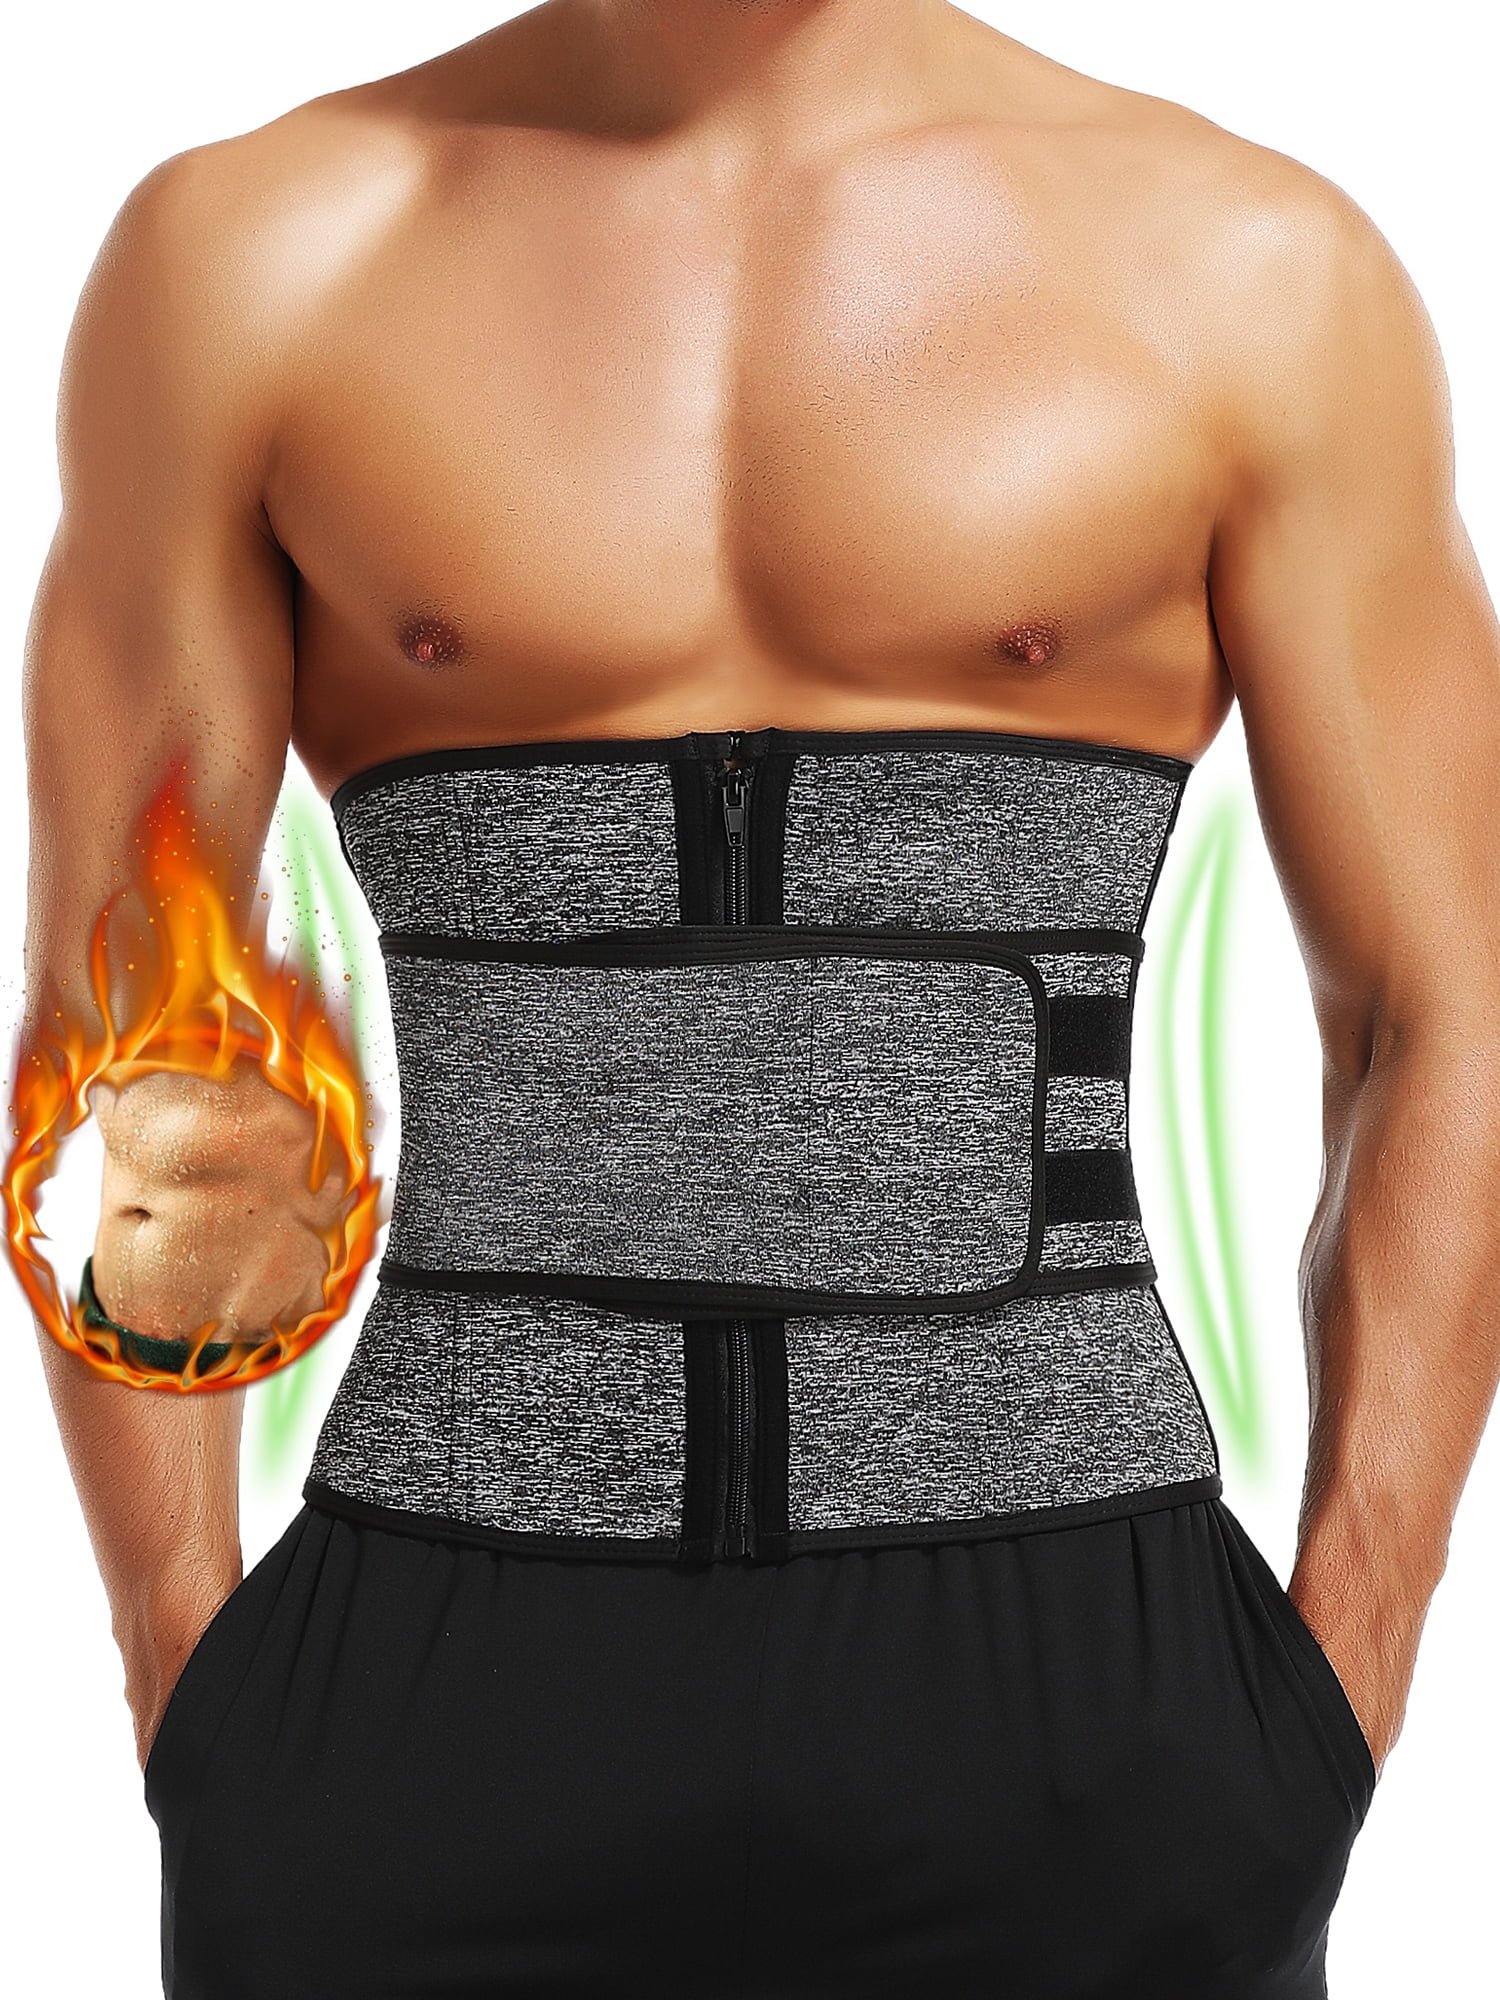 Men's Fat Burn Sauna Tummy Belt Body Shaper Girdle Belly Slimming Waist Trainer